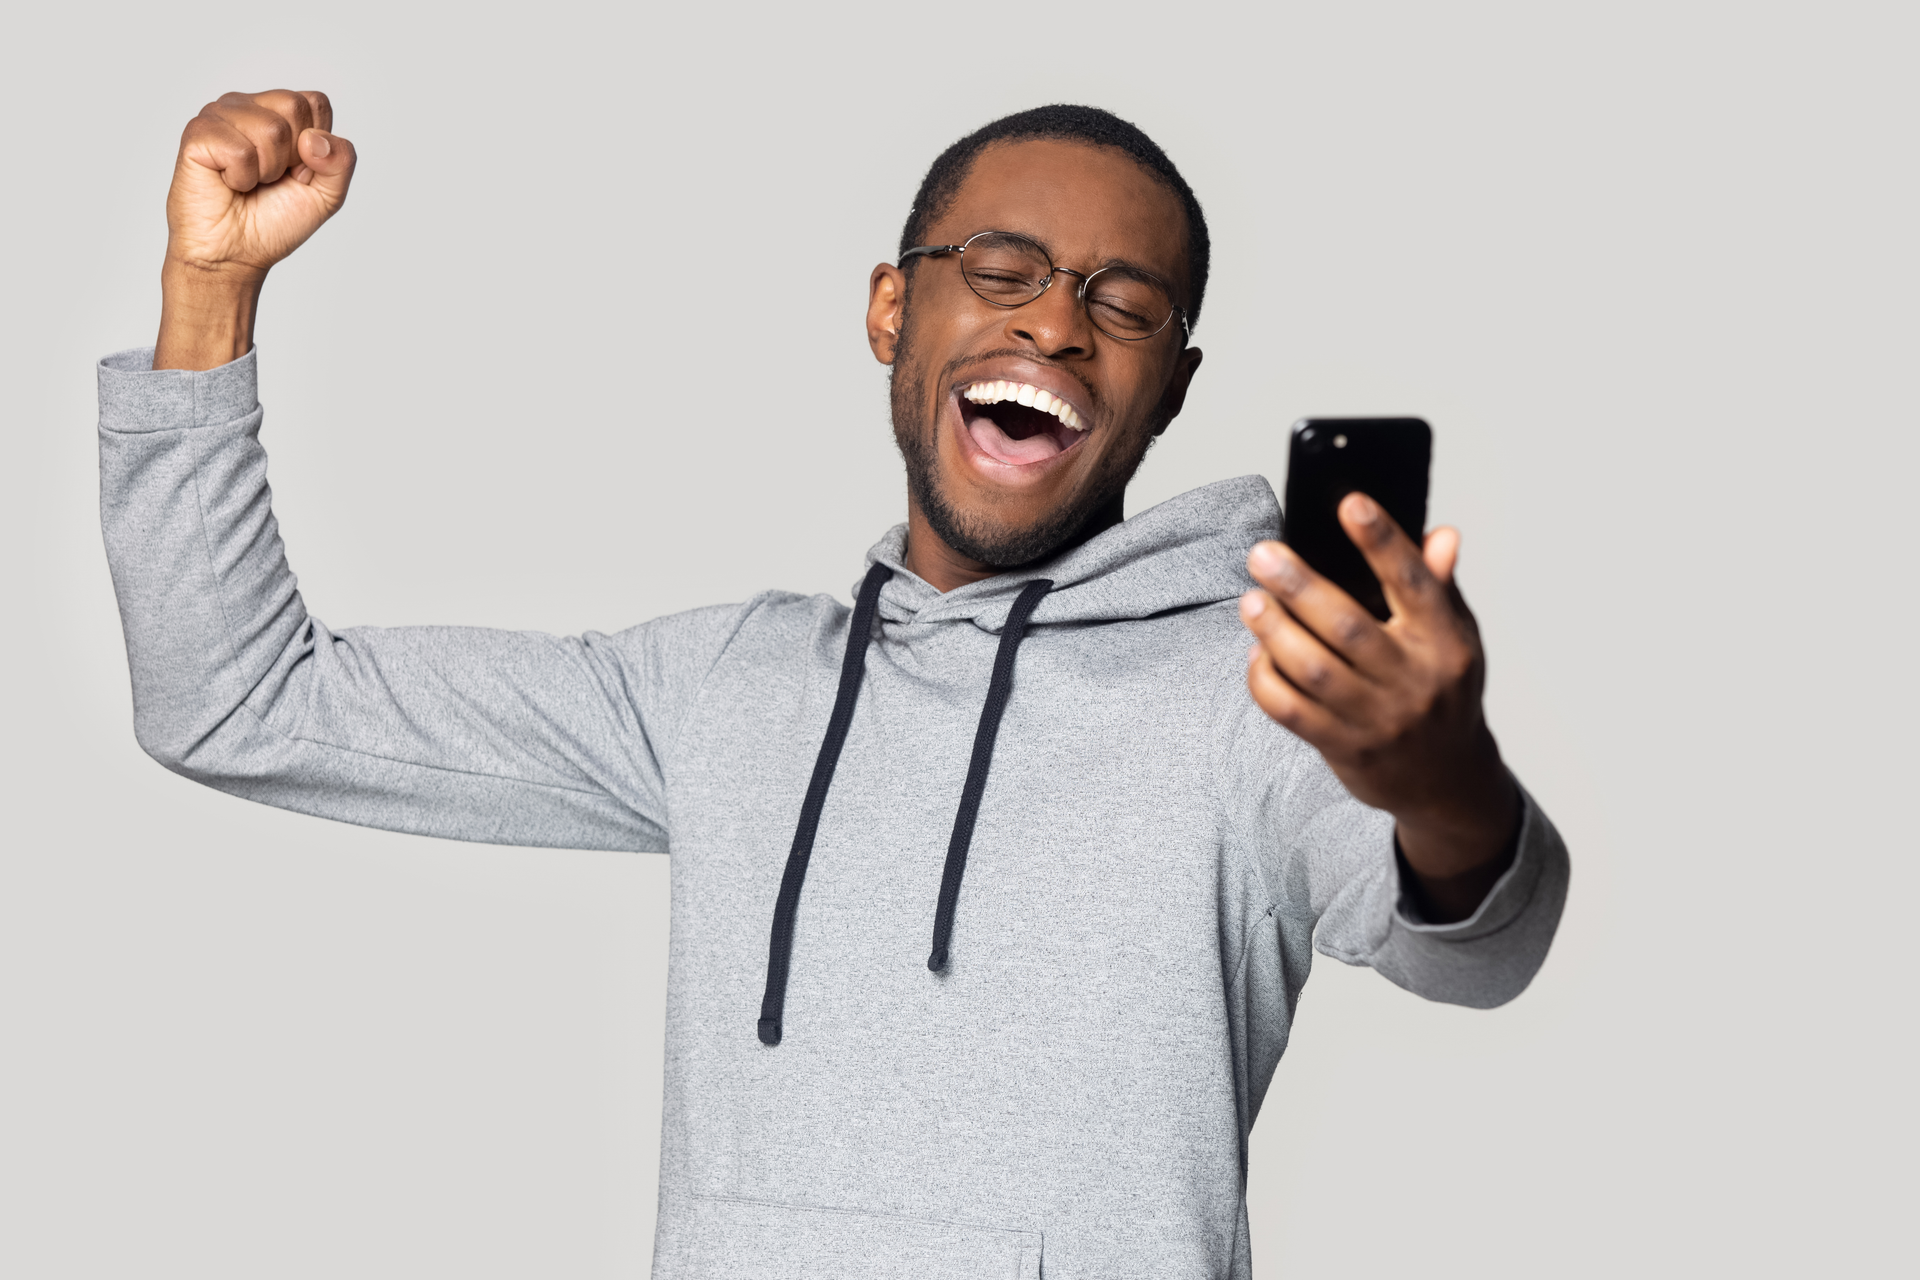 Head shot overjoyed happy millennial black man holding smartphone